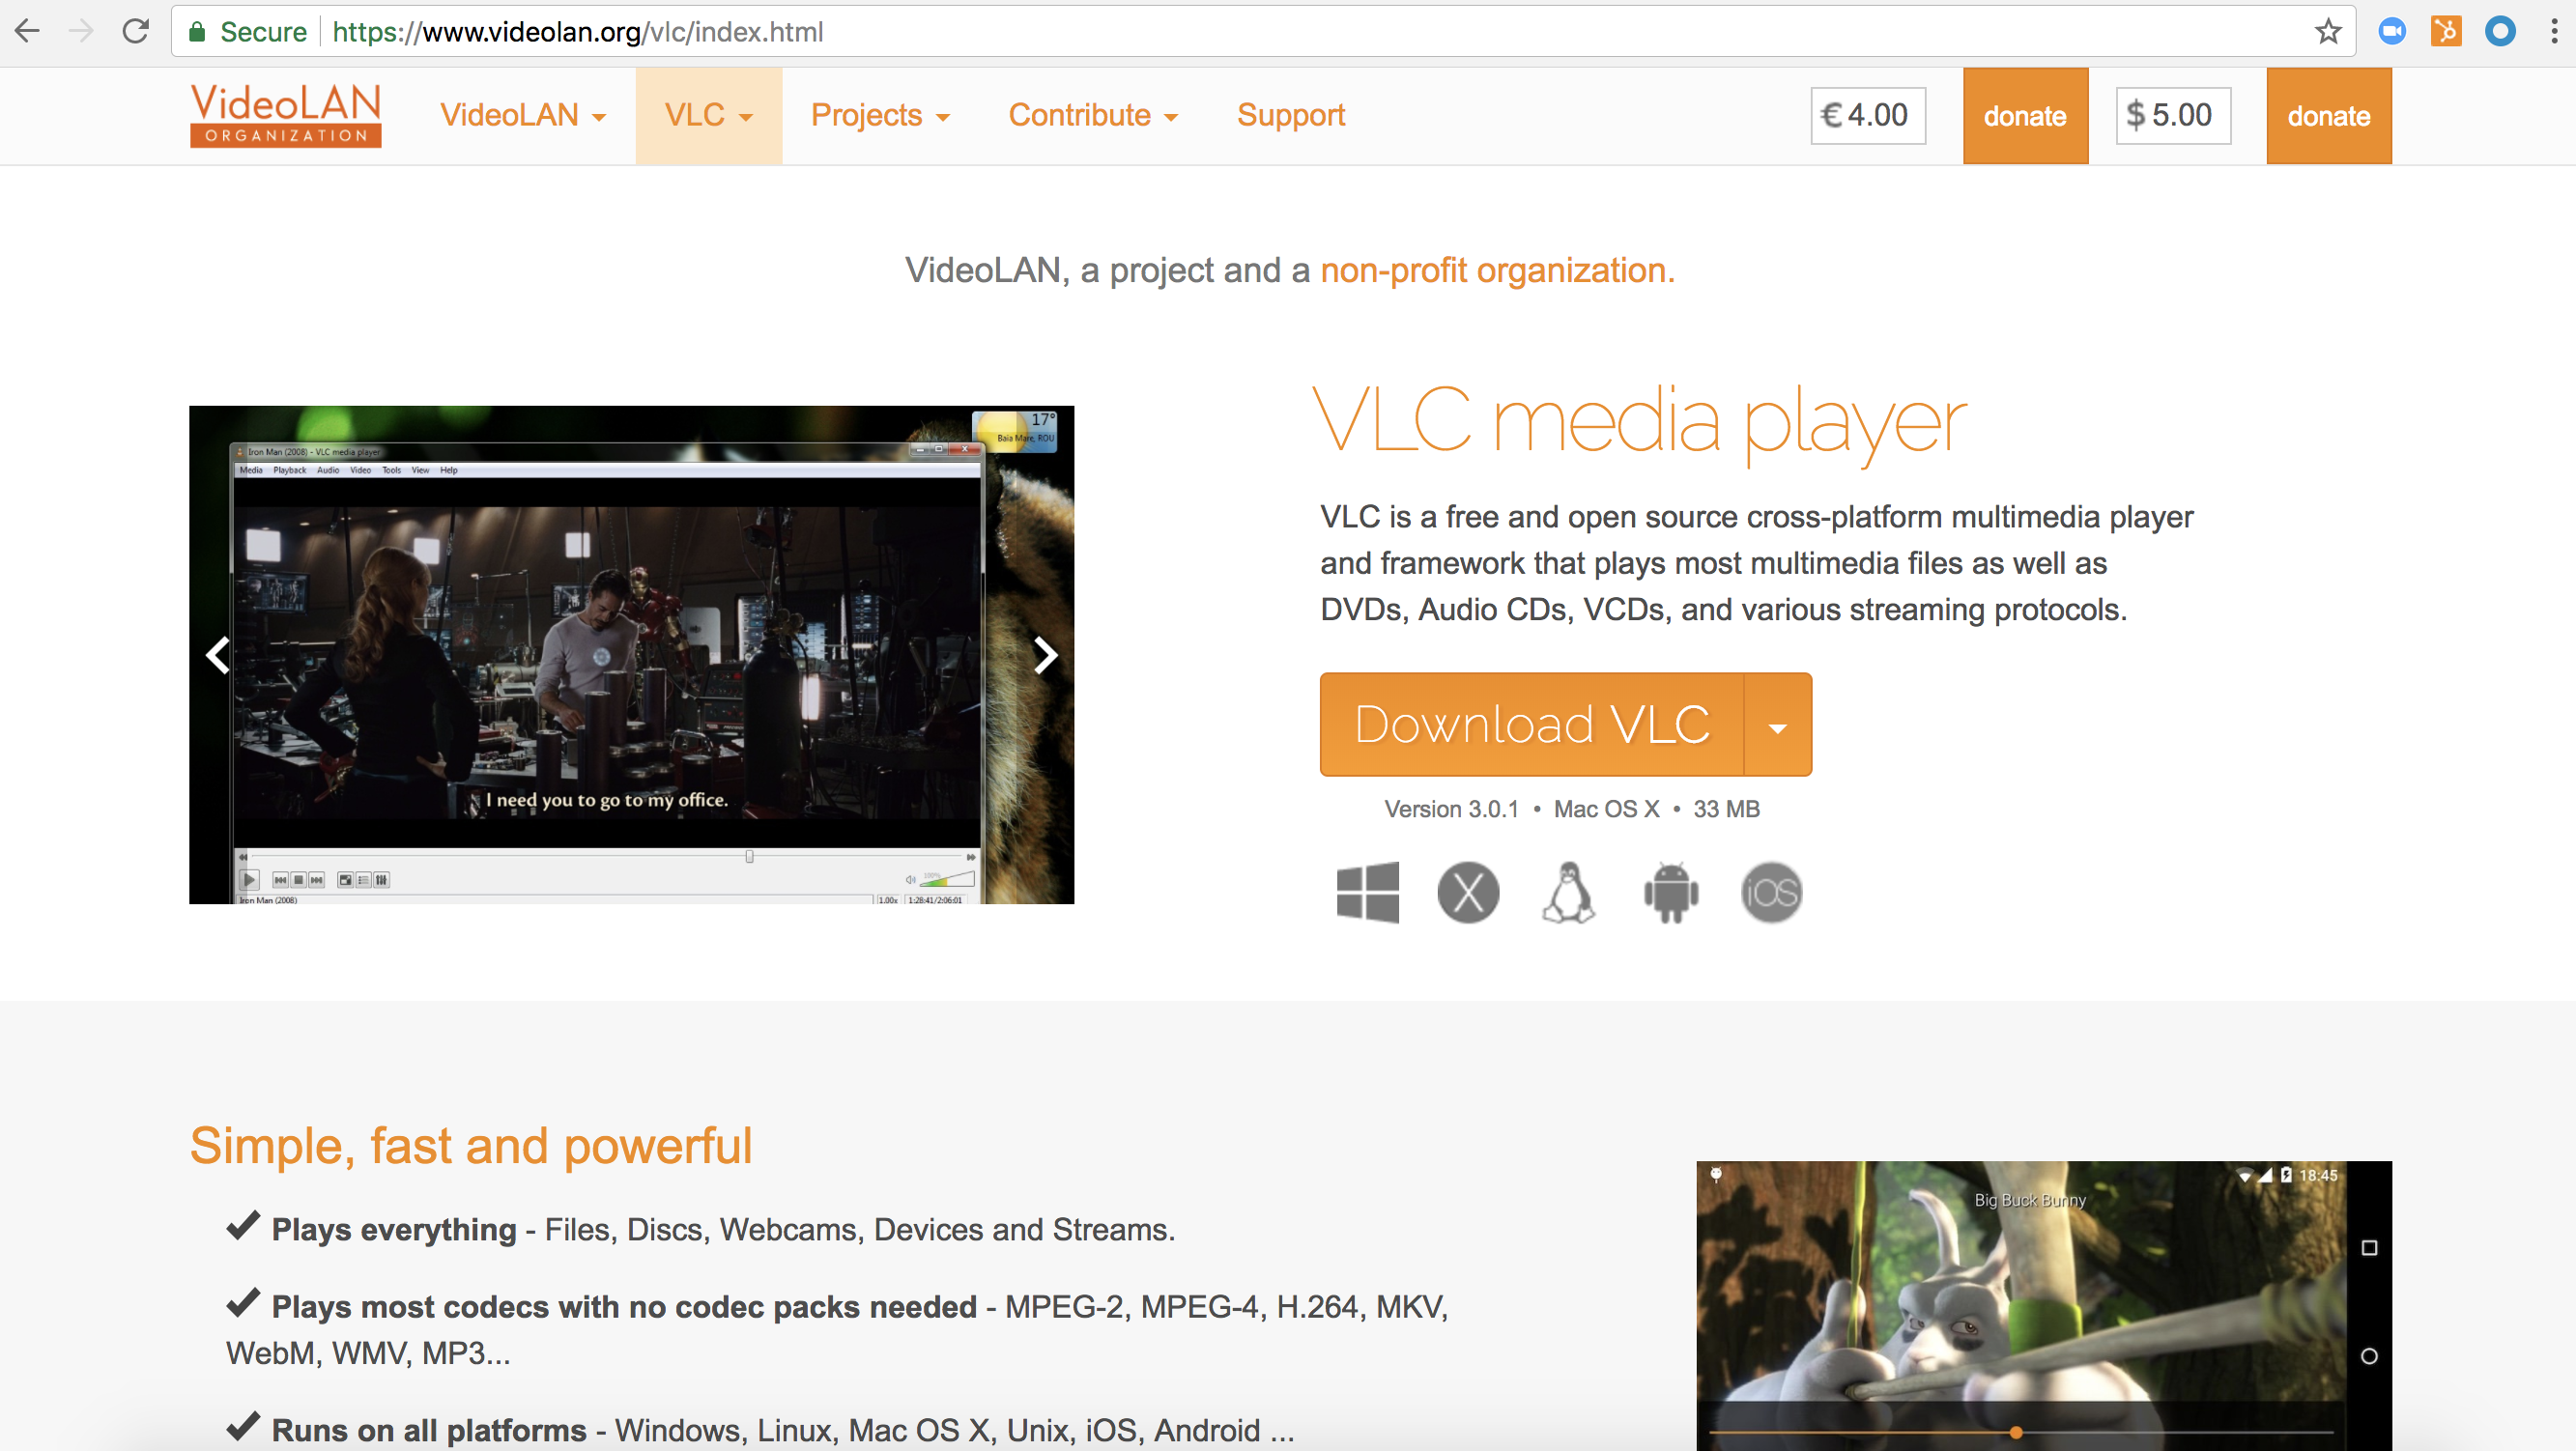 VLC media player homepage